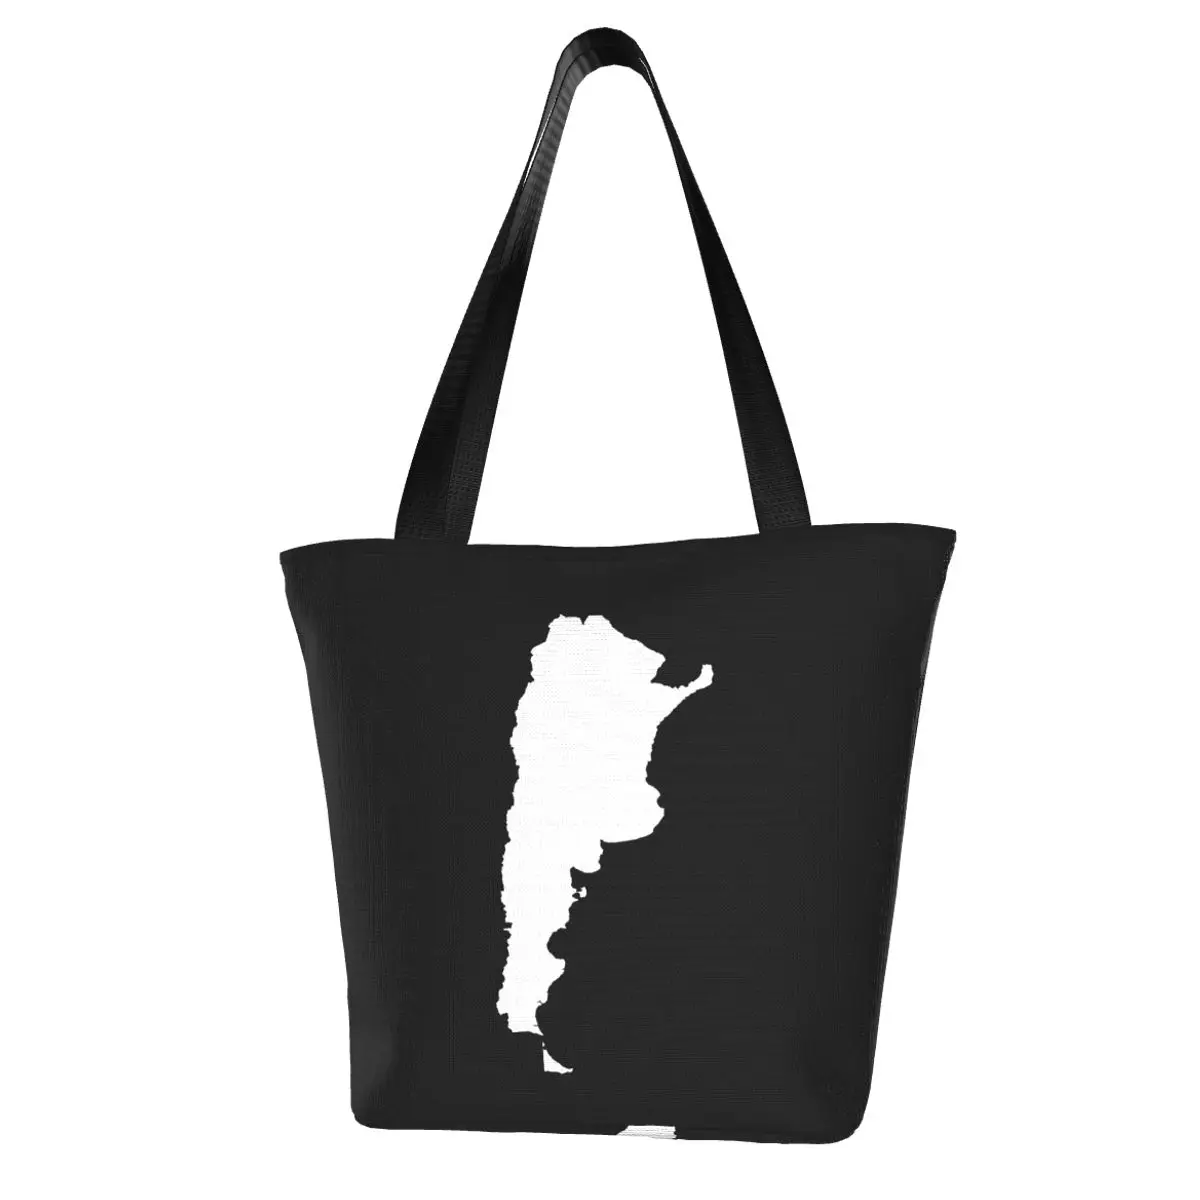 Argentina Shopping Bag Aesthetic Cloth Outdoor Handbag Female Fashion Bags